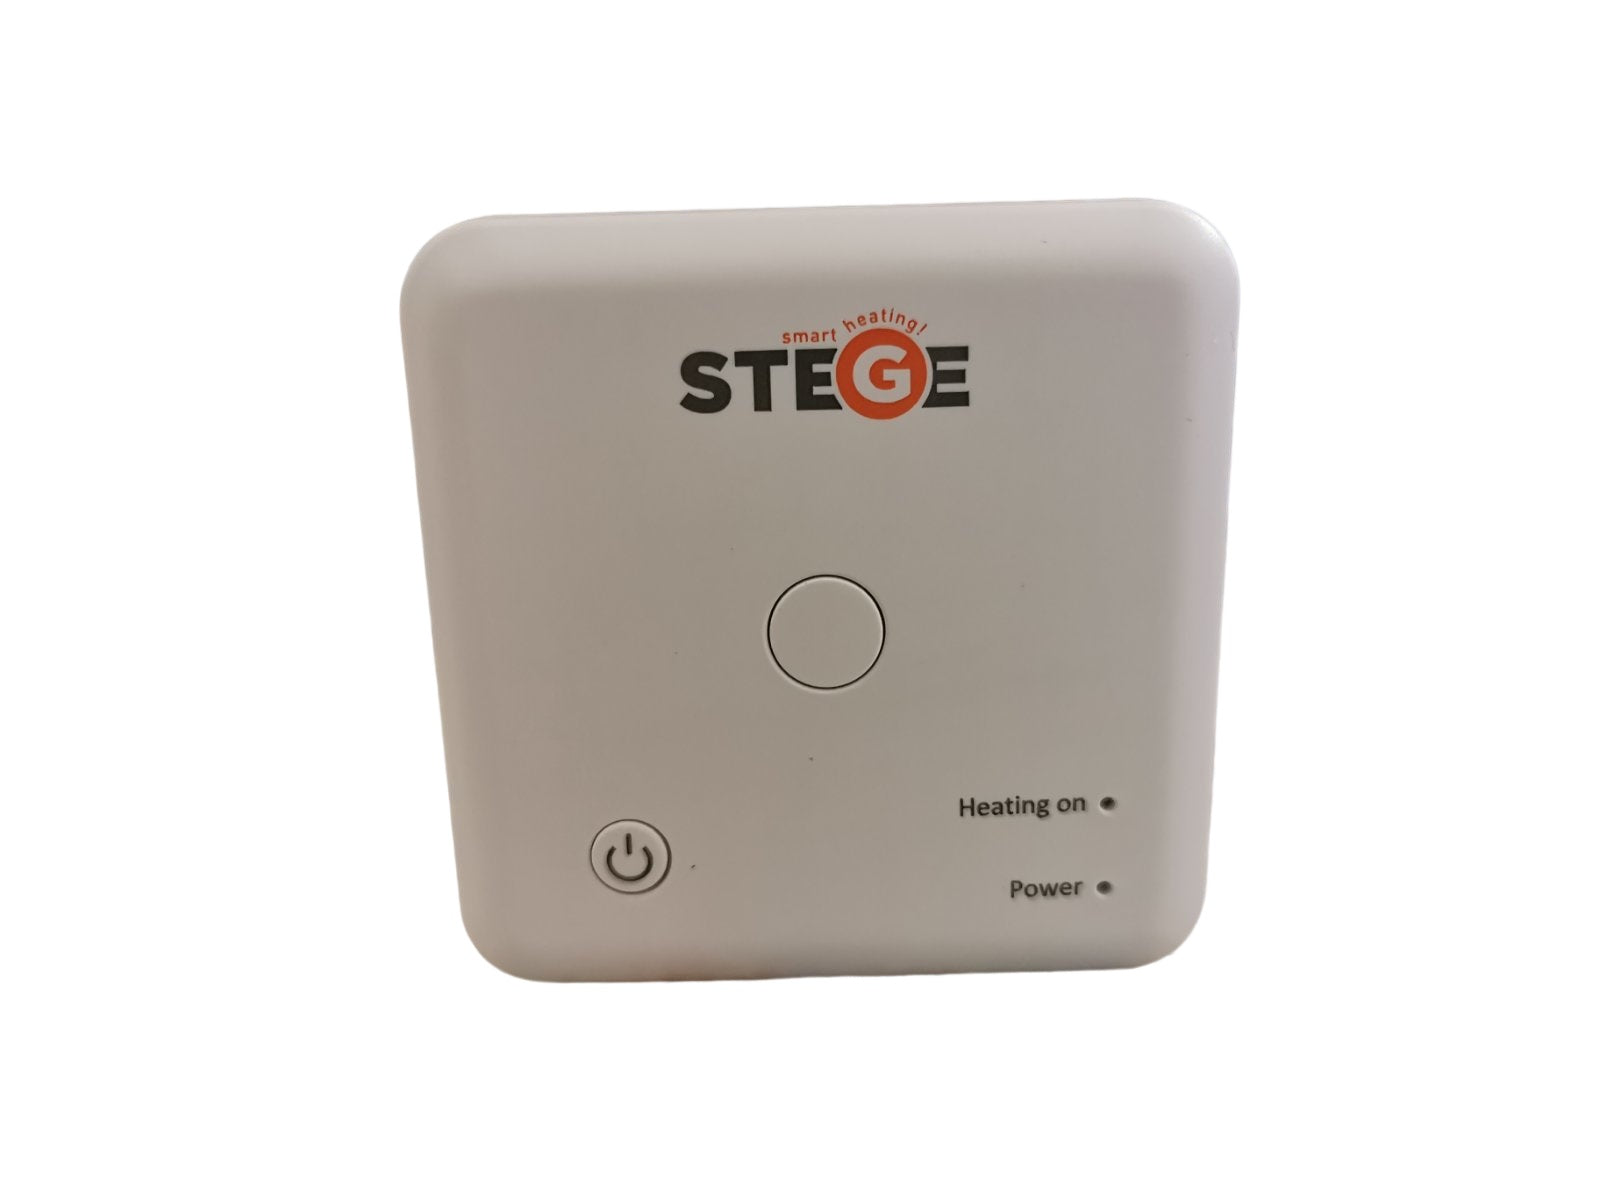 Bežični digitalni termostat Stege za upravljanjem vašim kotlom. Podešavanje željenje temperature bilo gde u kući. Pogodan za gasne kotlove, elektro kotlove kao i za kotlove na pelet.